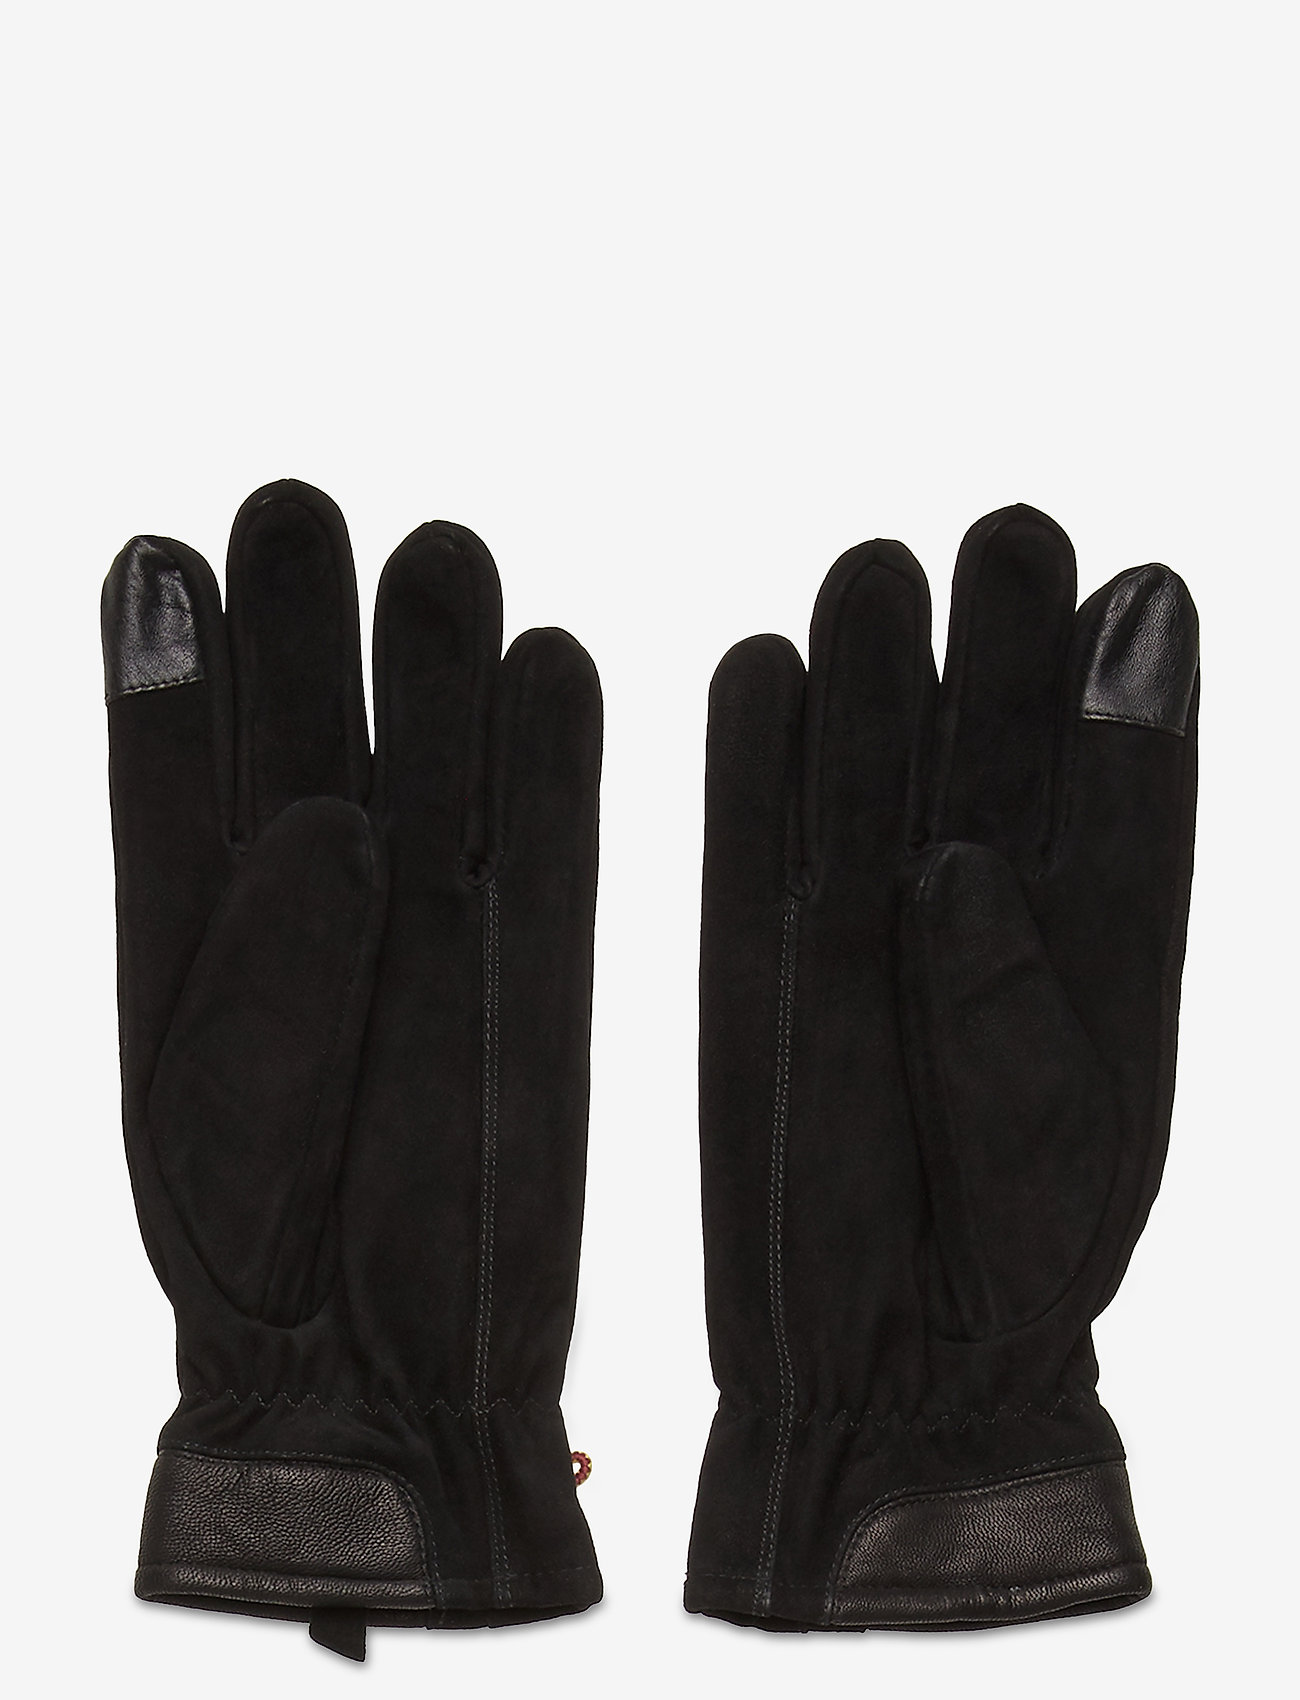 Timberland - Winter Hill Nubuck Glove BLACK - verjaardagscadeaus - black - 1